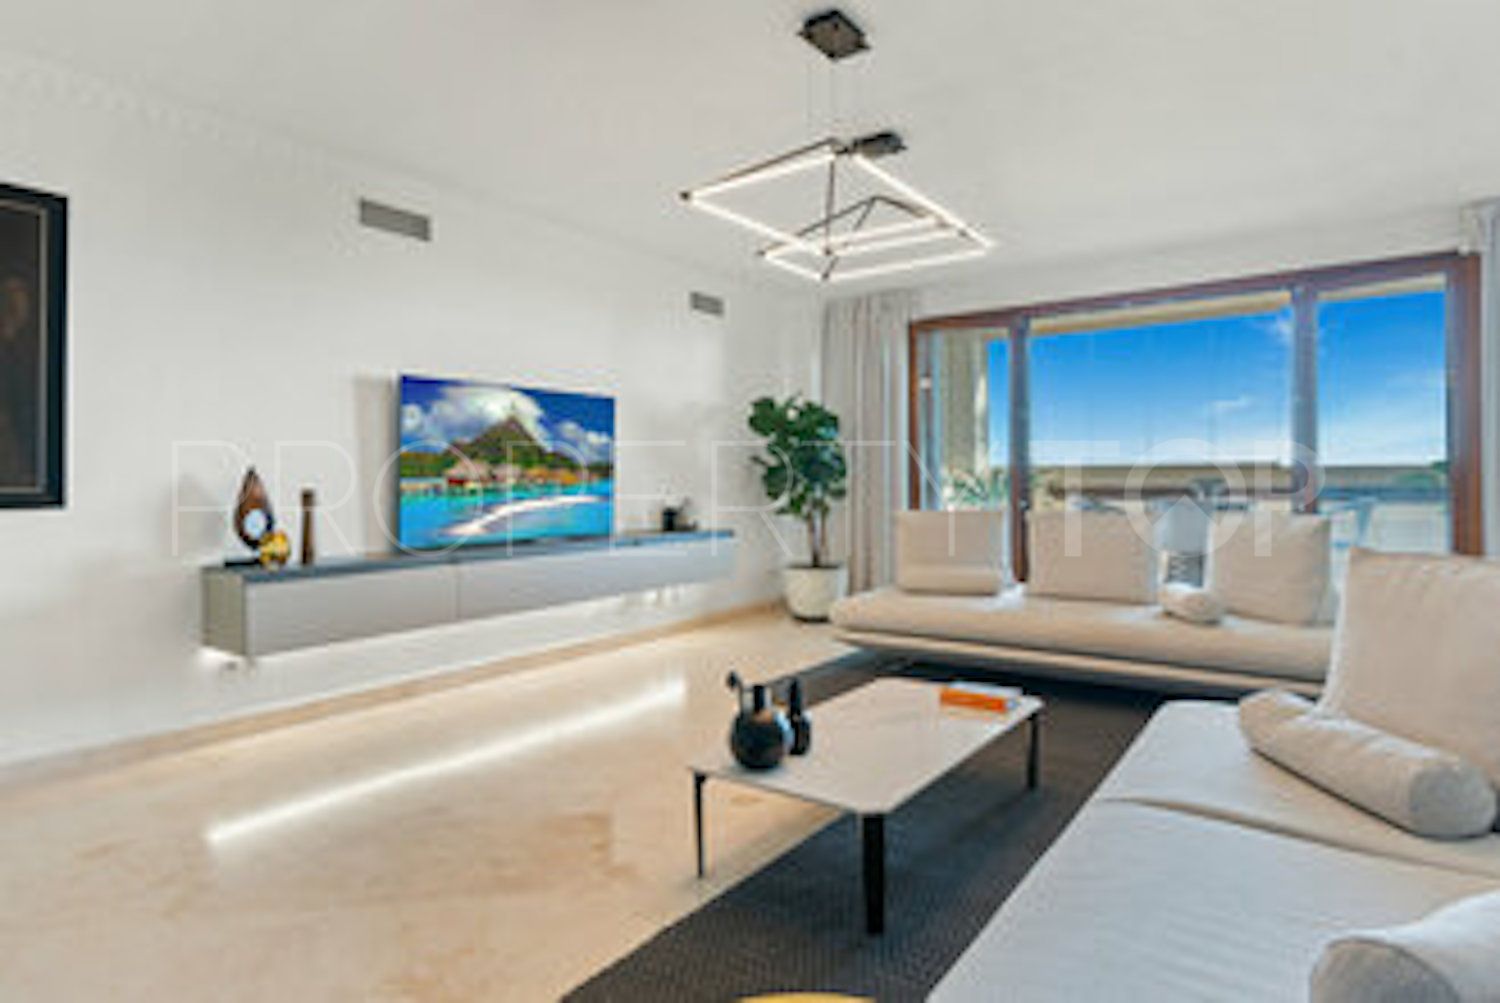 Apartment in Marbella for sale